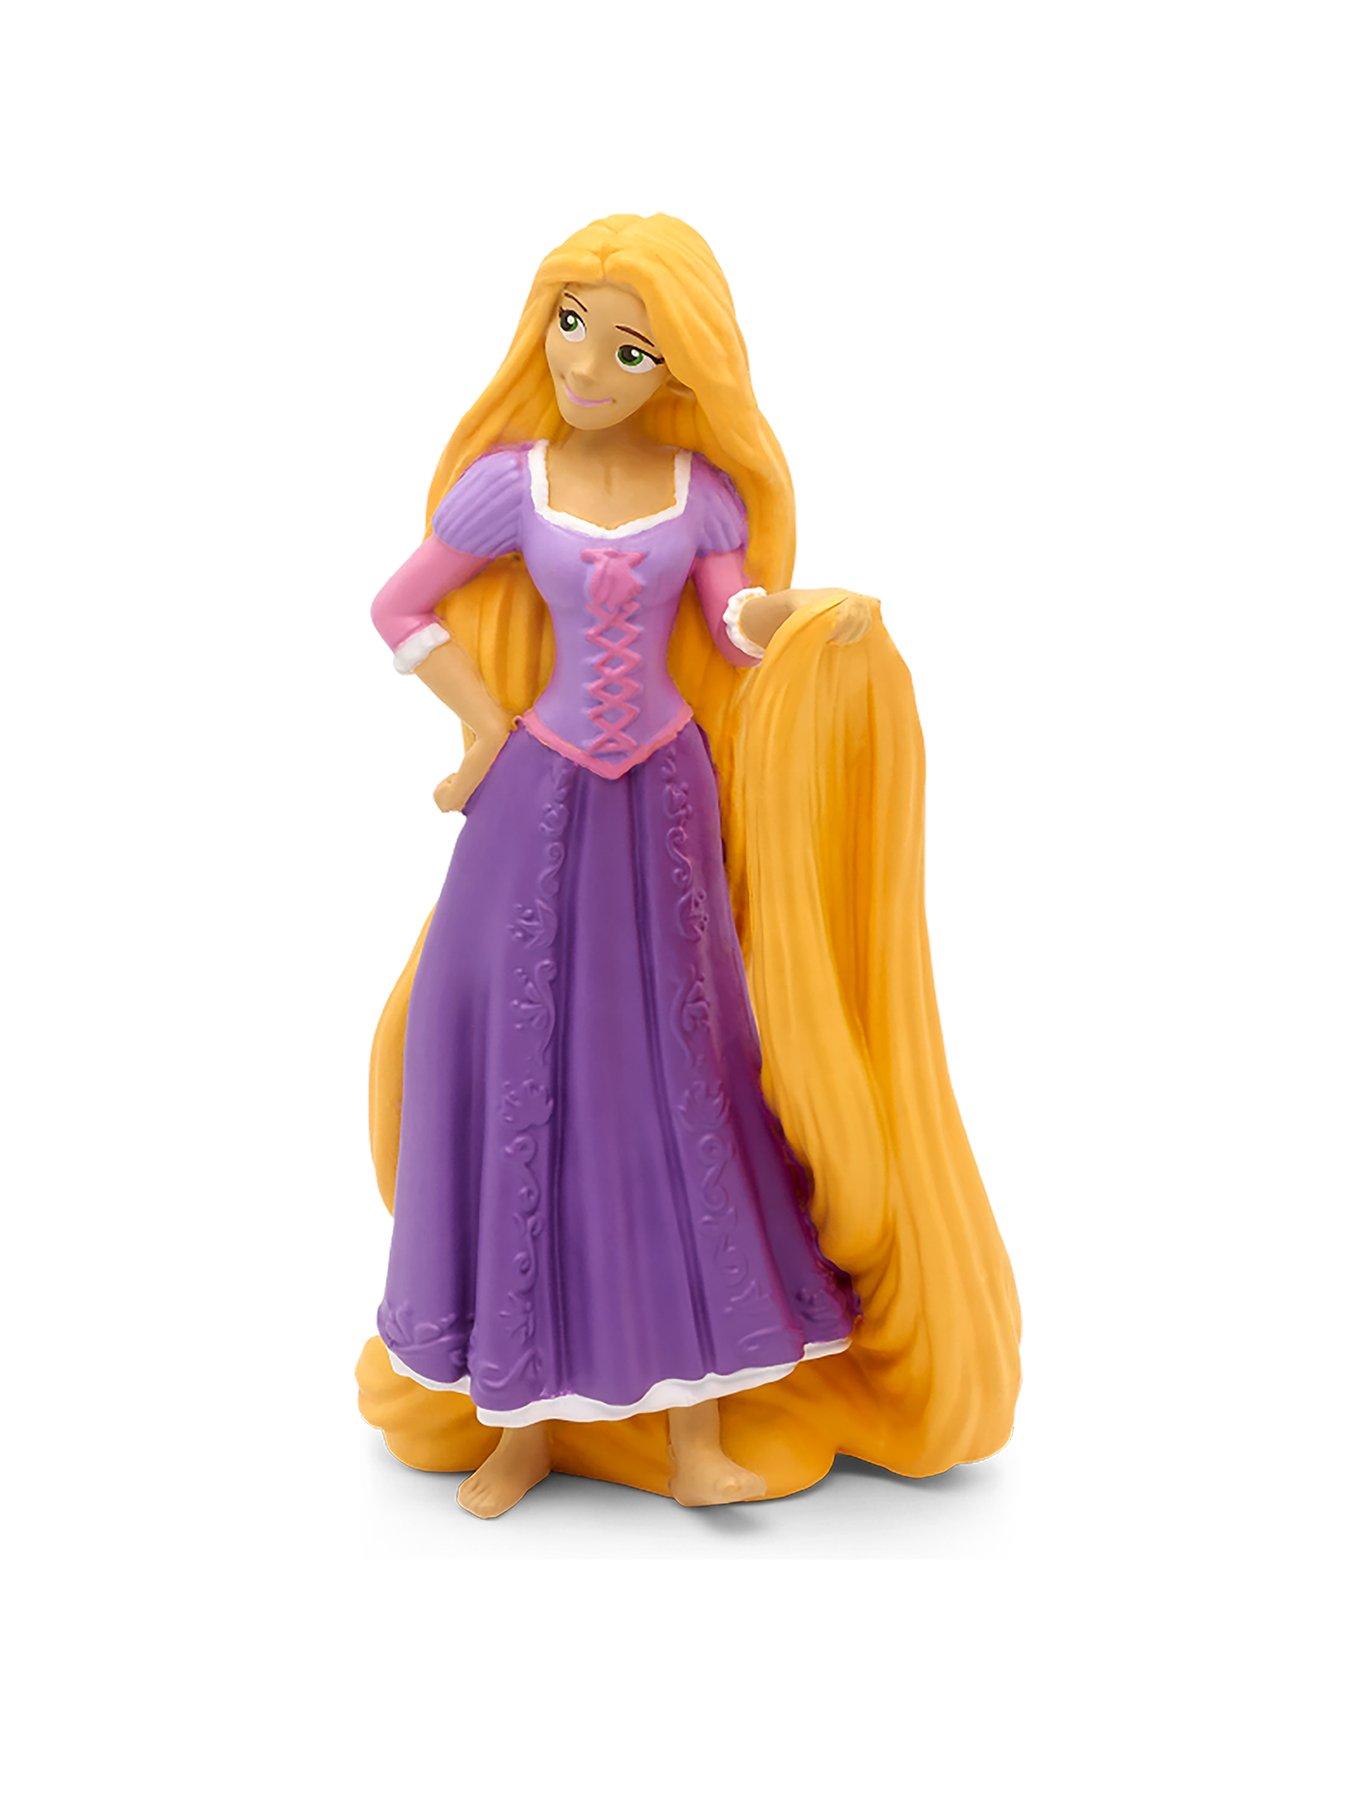 Tonies Disney Princess Toniebox Audio Player Bundle with Elsa, Ariel,  Cinderella, & Belle, for Kids 3+, Light Blue 